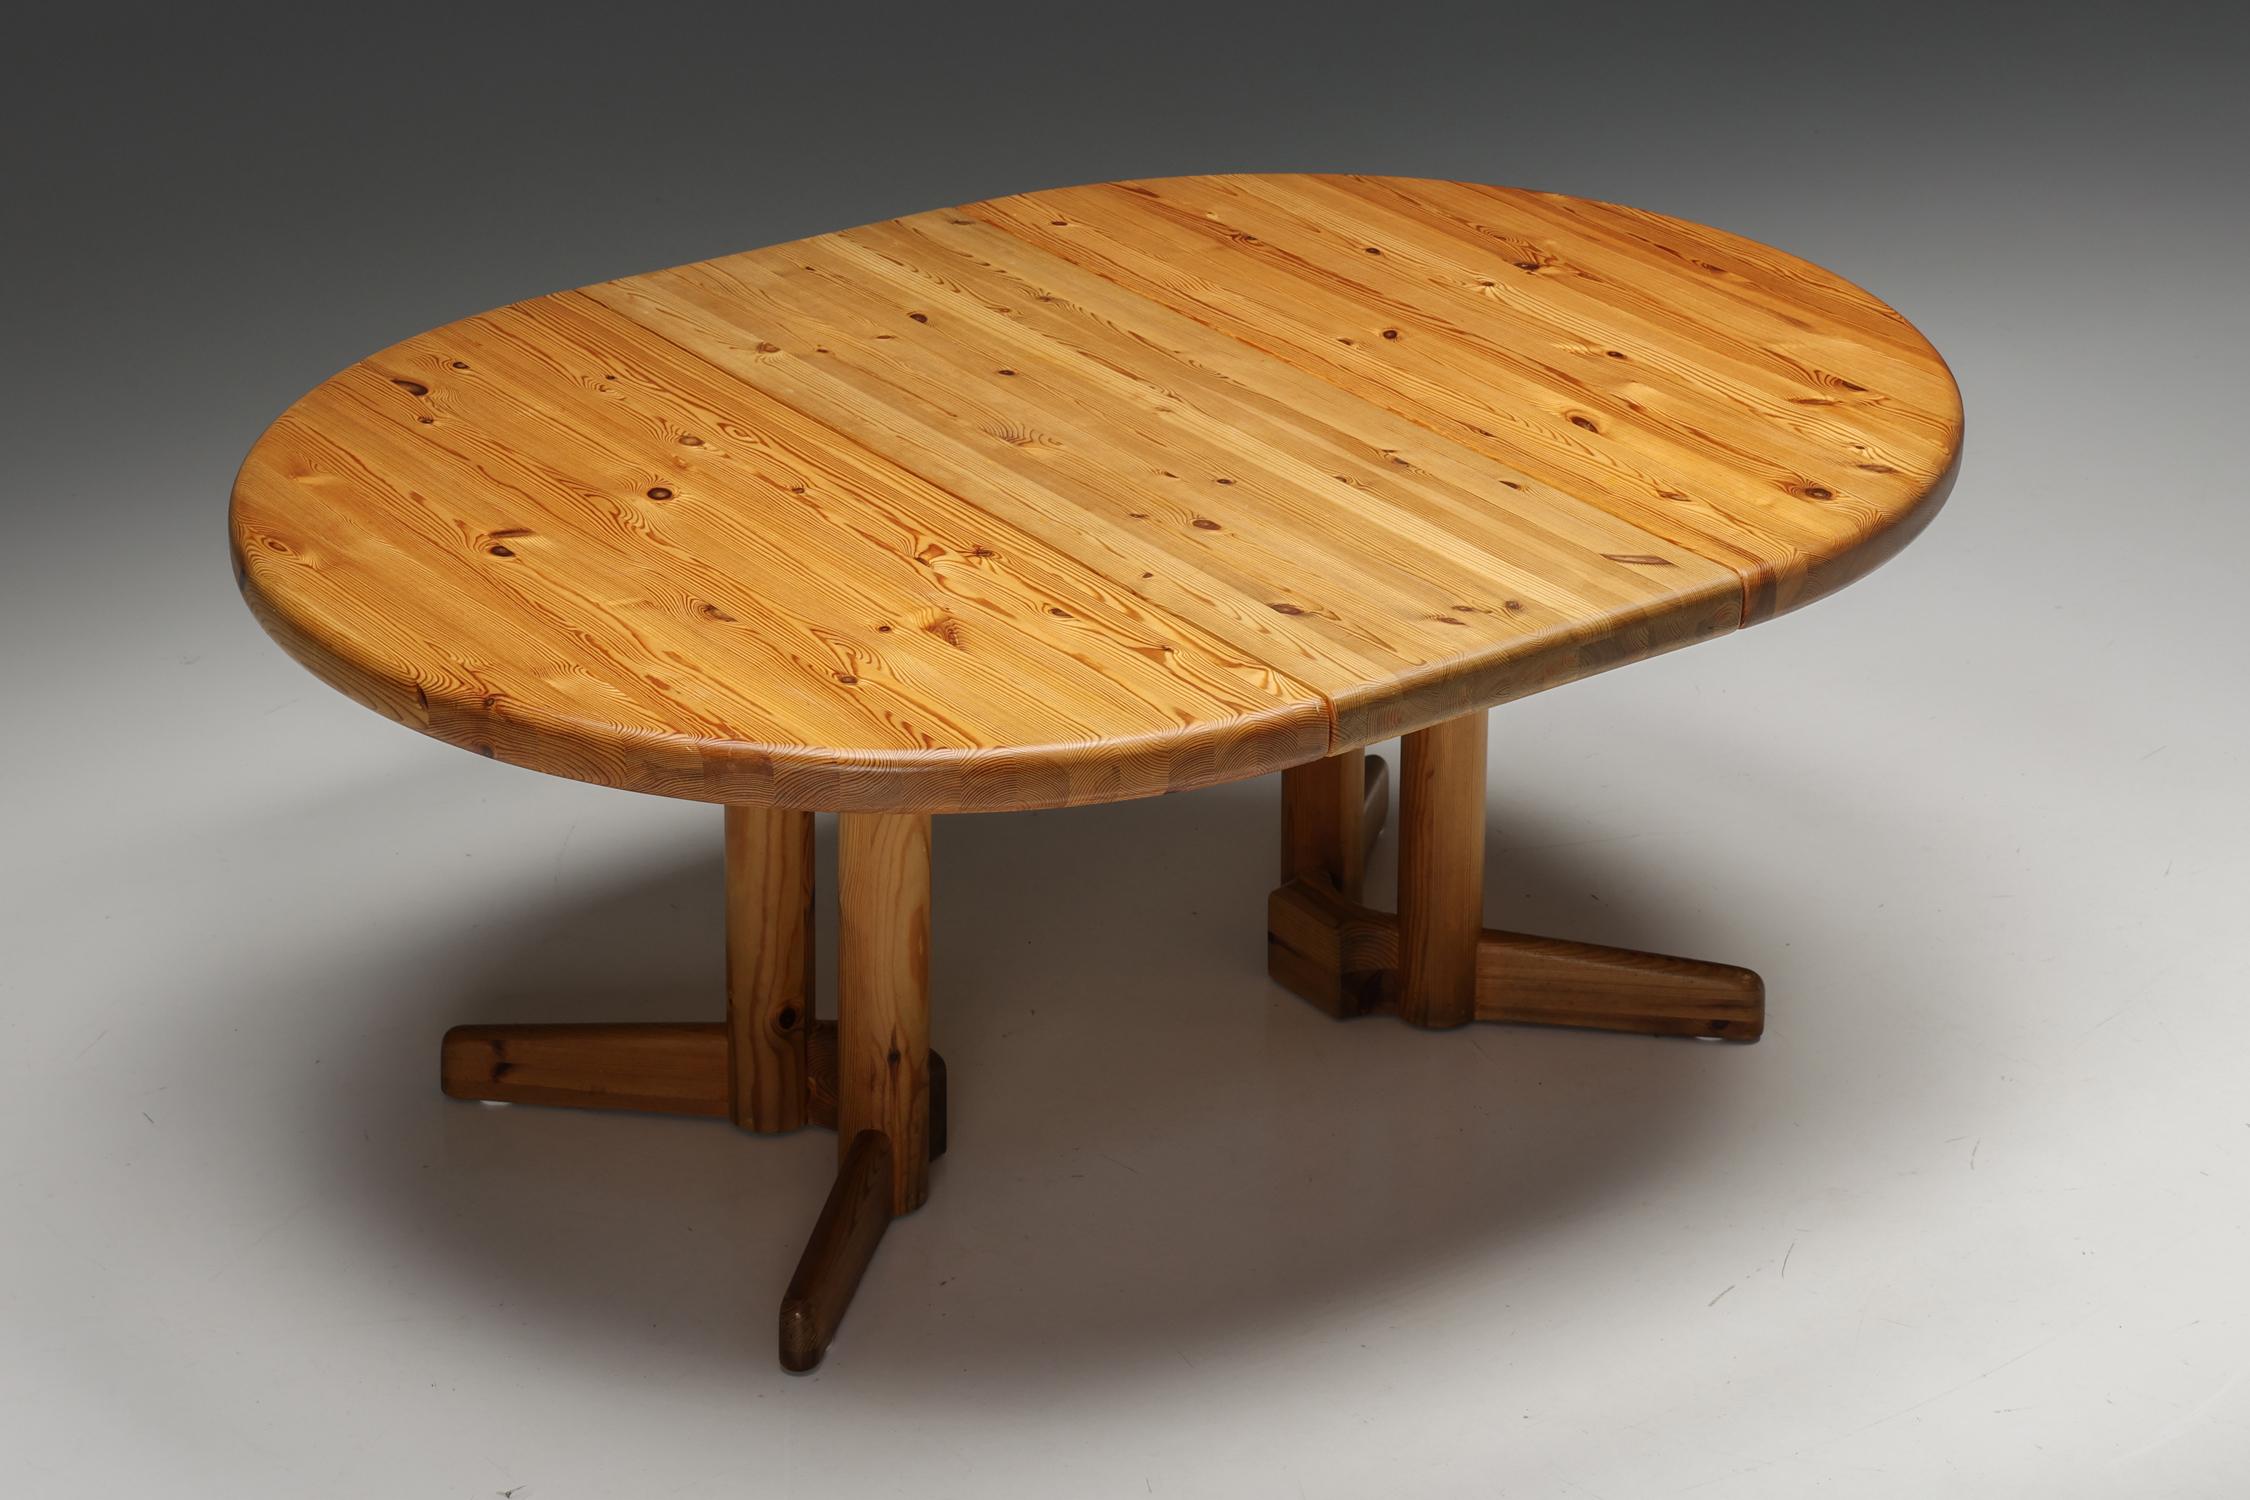 Scandinavian Modern Rainer Daumiller Extendable Dining Table in Solid Pine, Danish Design, 1970's For Sale